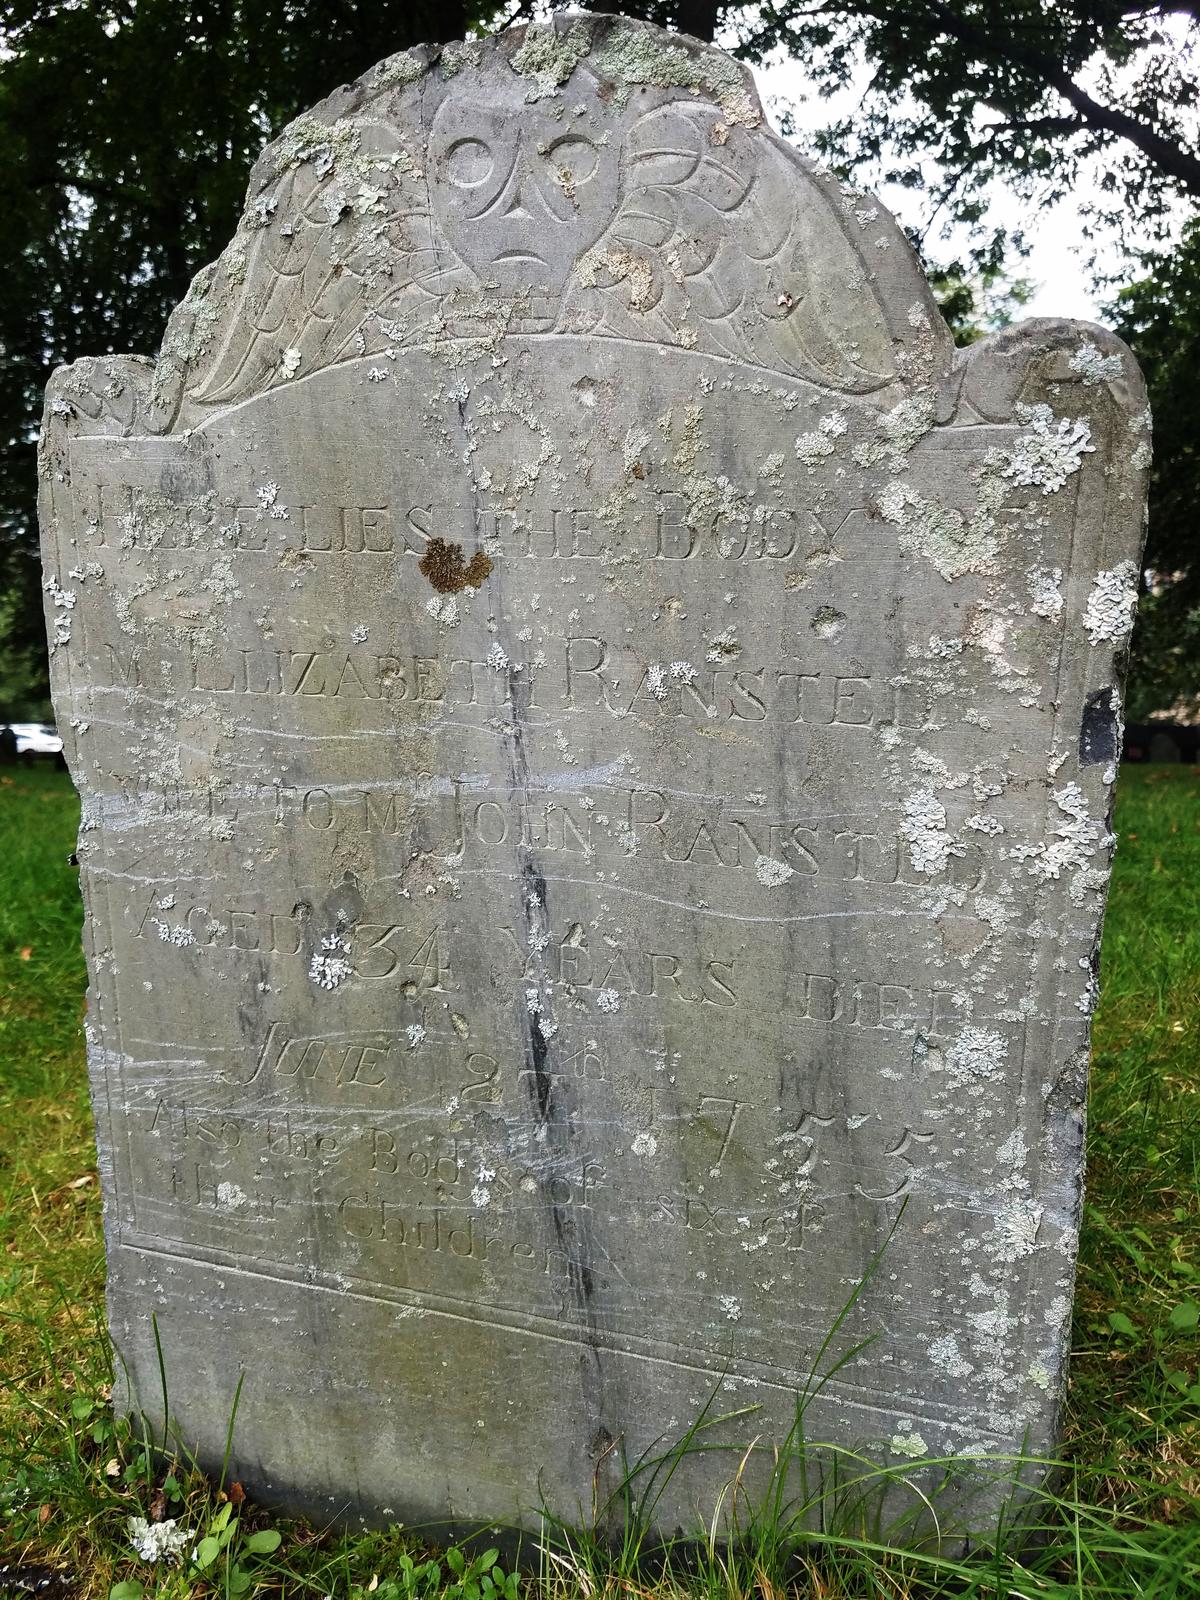 The gravestone of Elizabeth Ransted